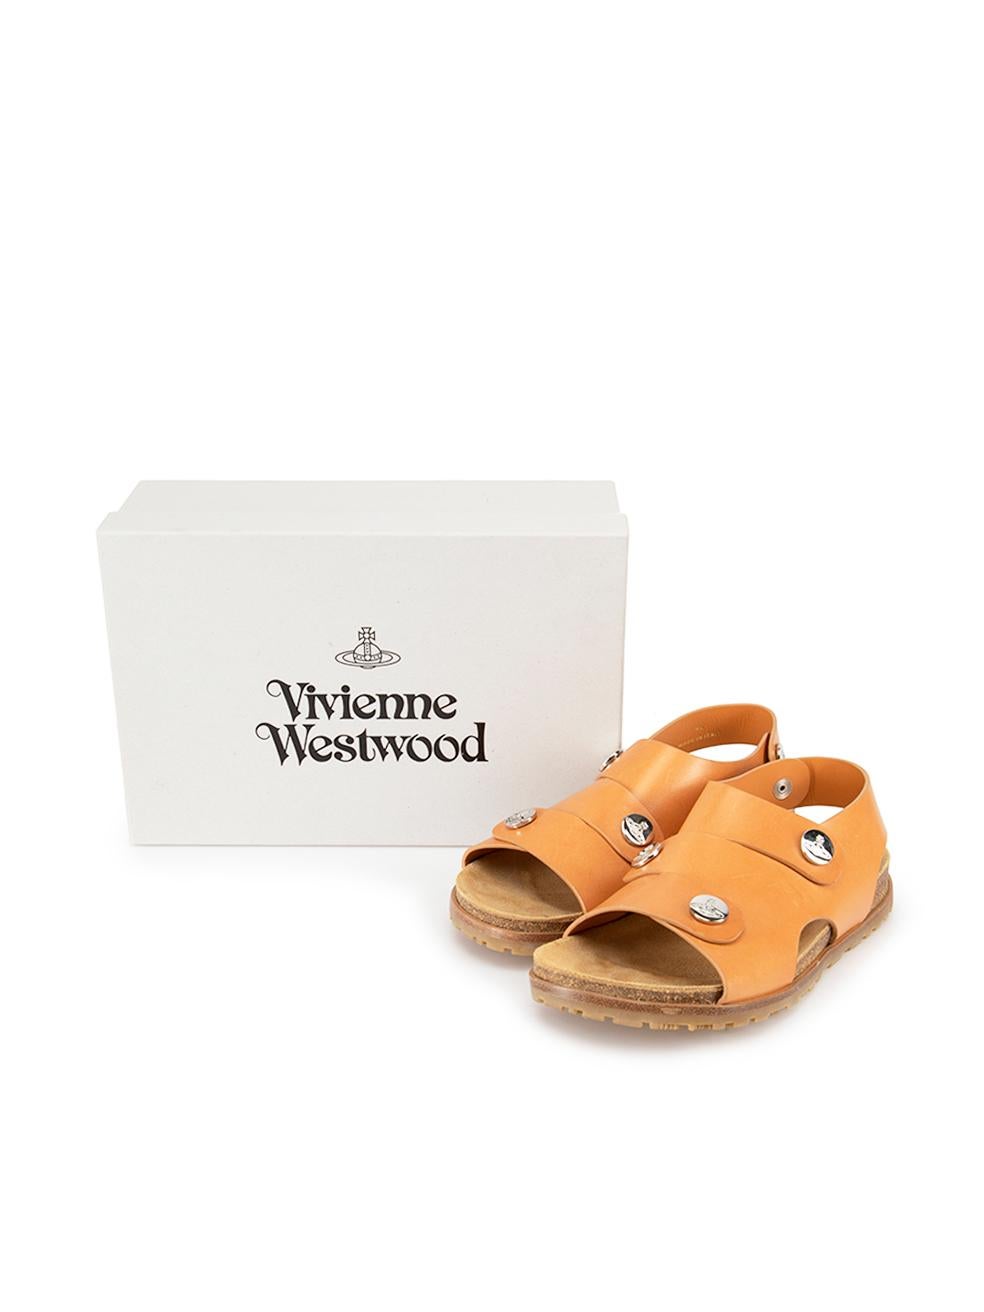 Vivienne Westwood Brown Leather Flintstone Trek Sandals Size IT 40 1